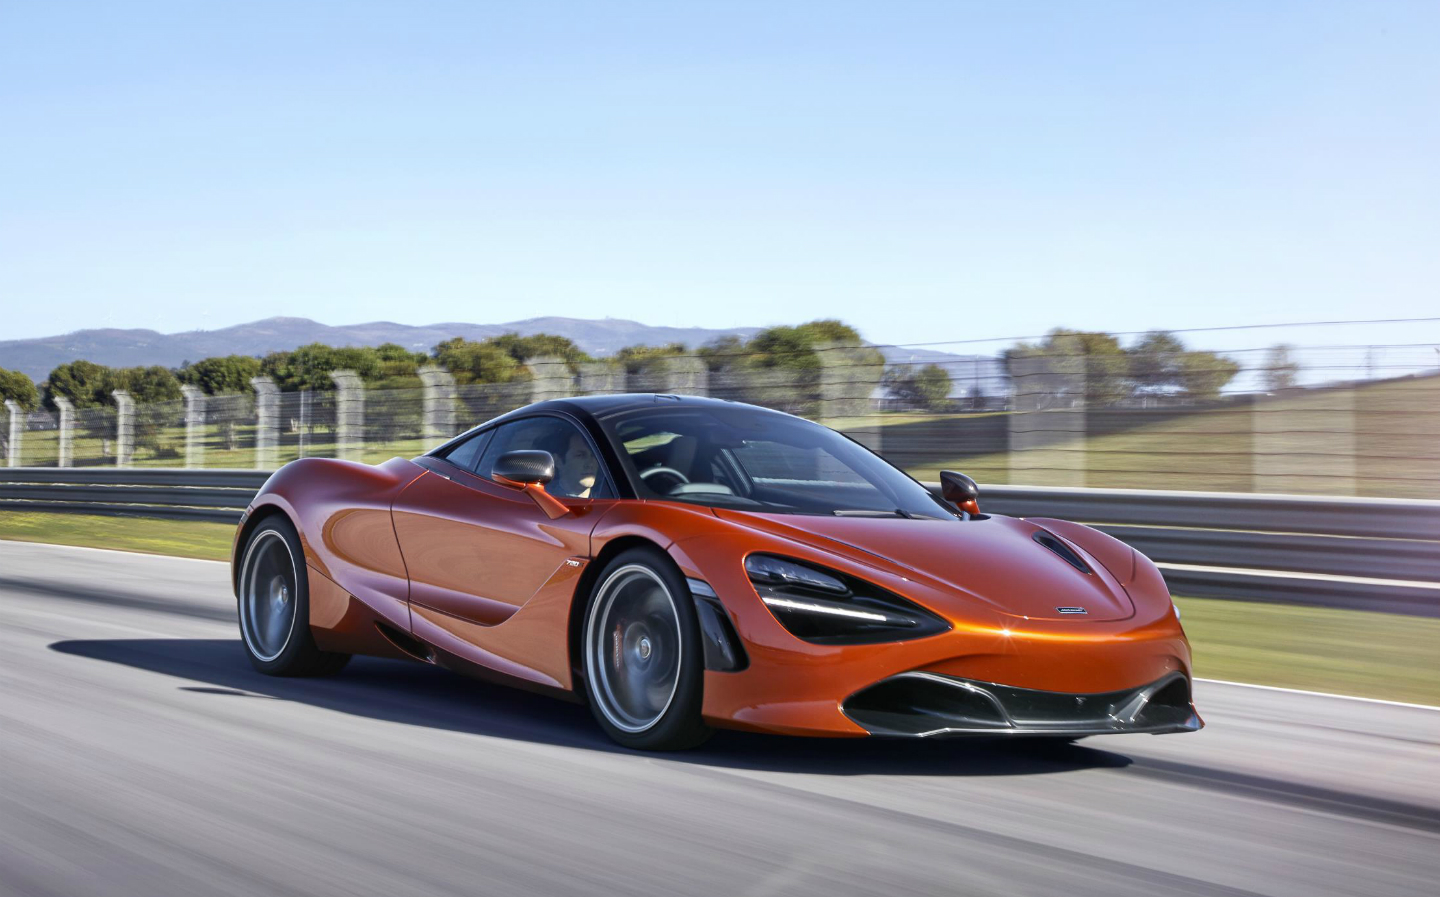 McLaren 720S: British car maker tries to outrun Ferrari